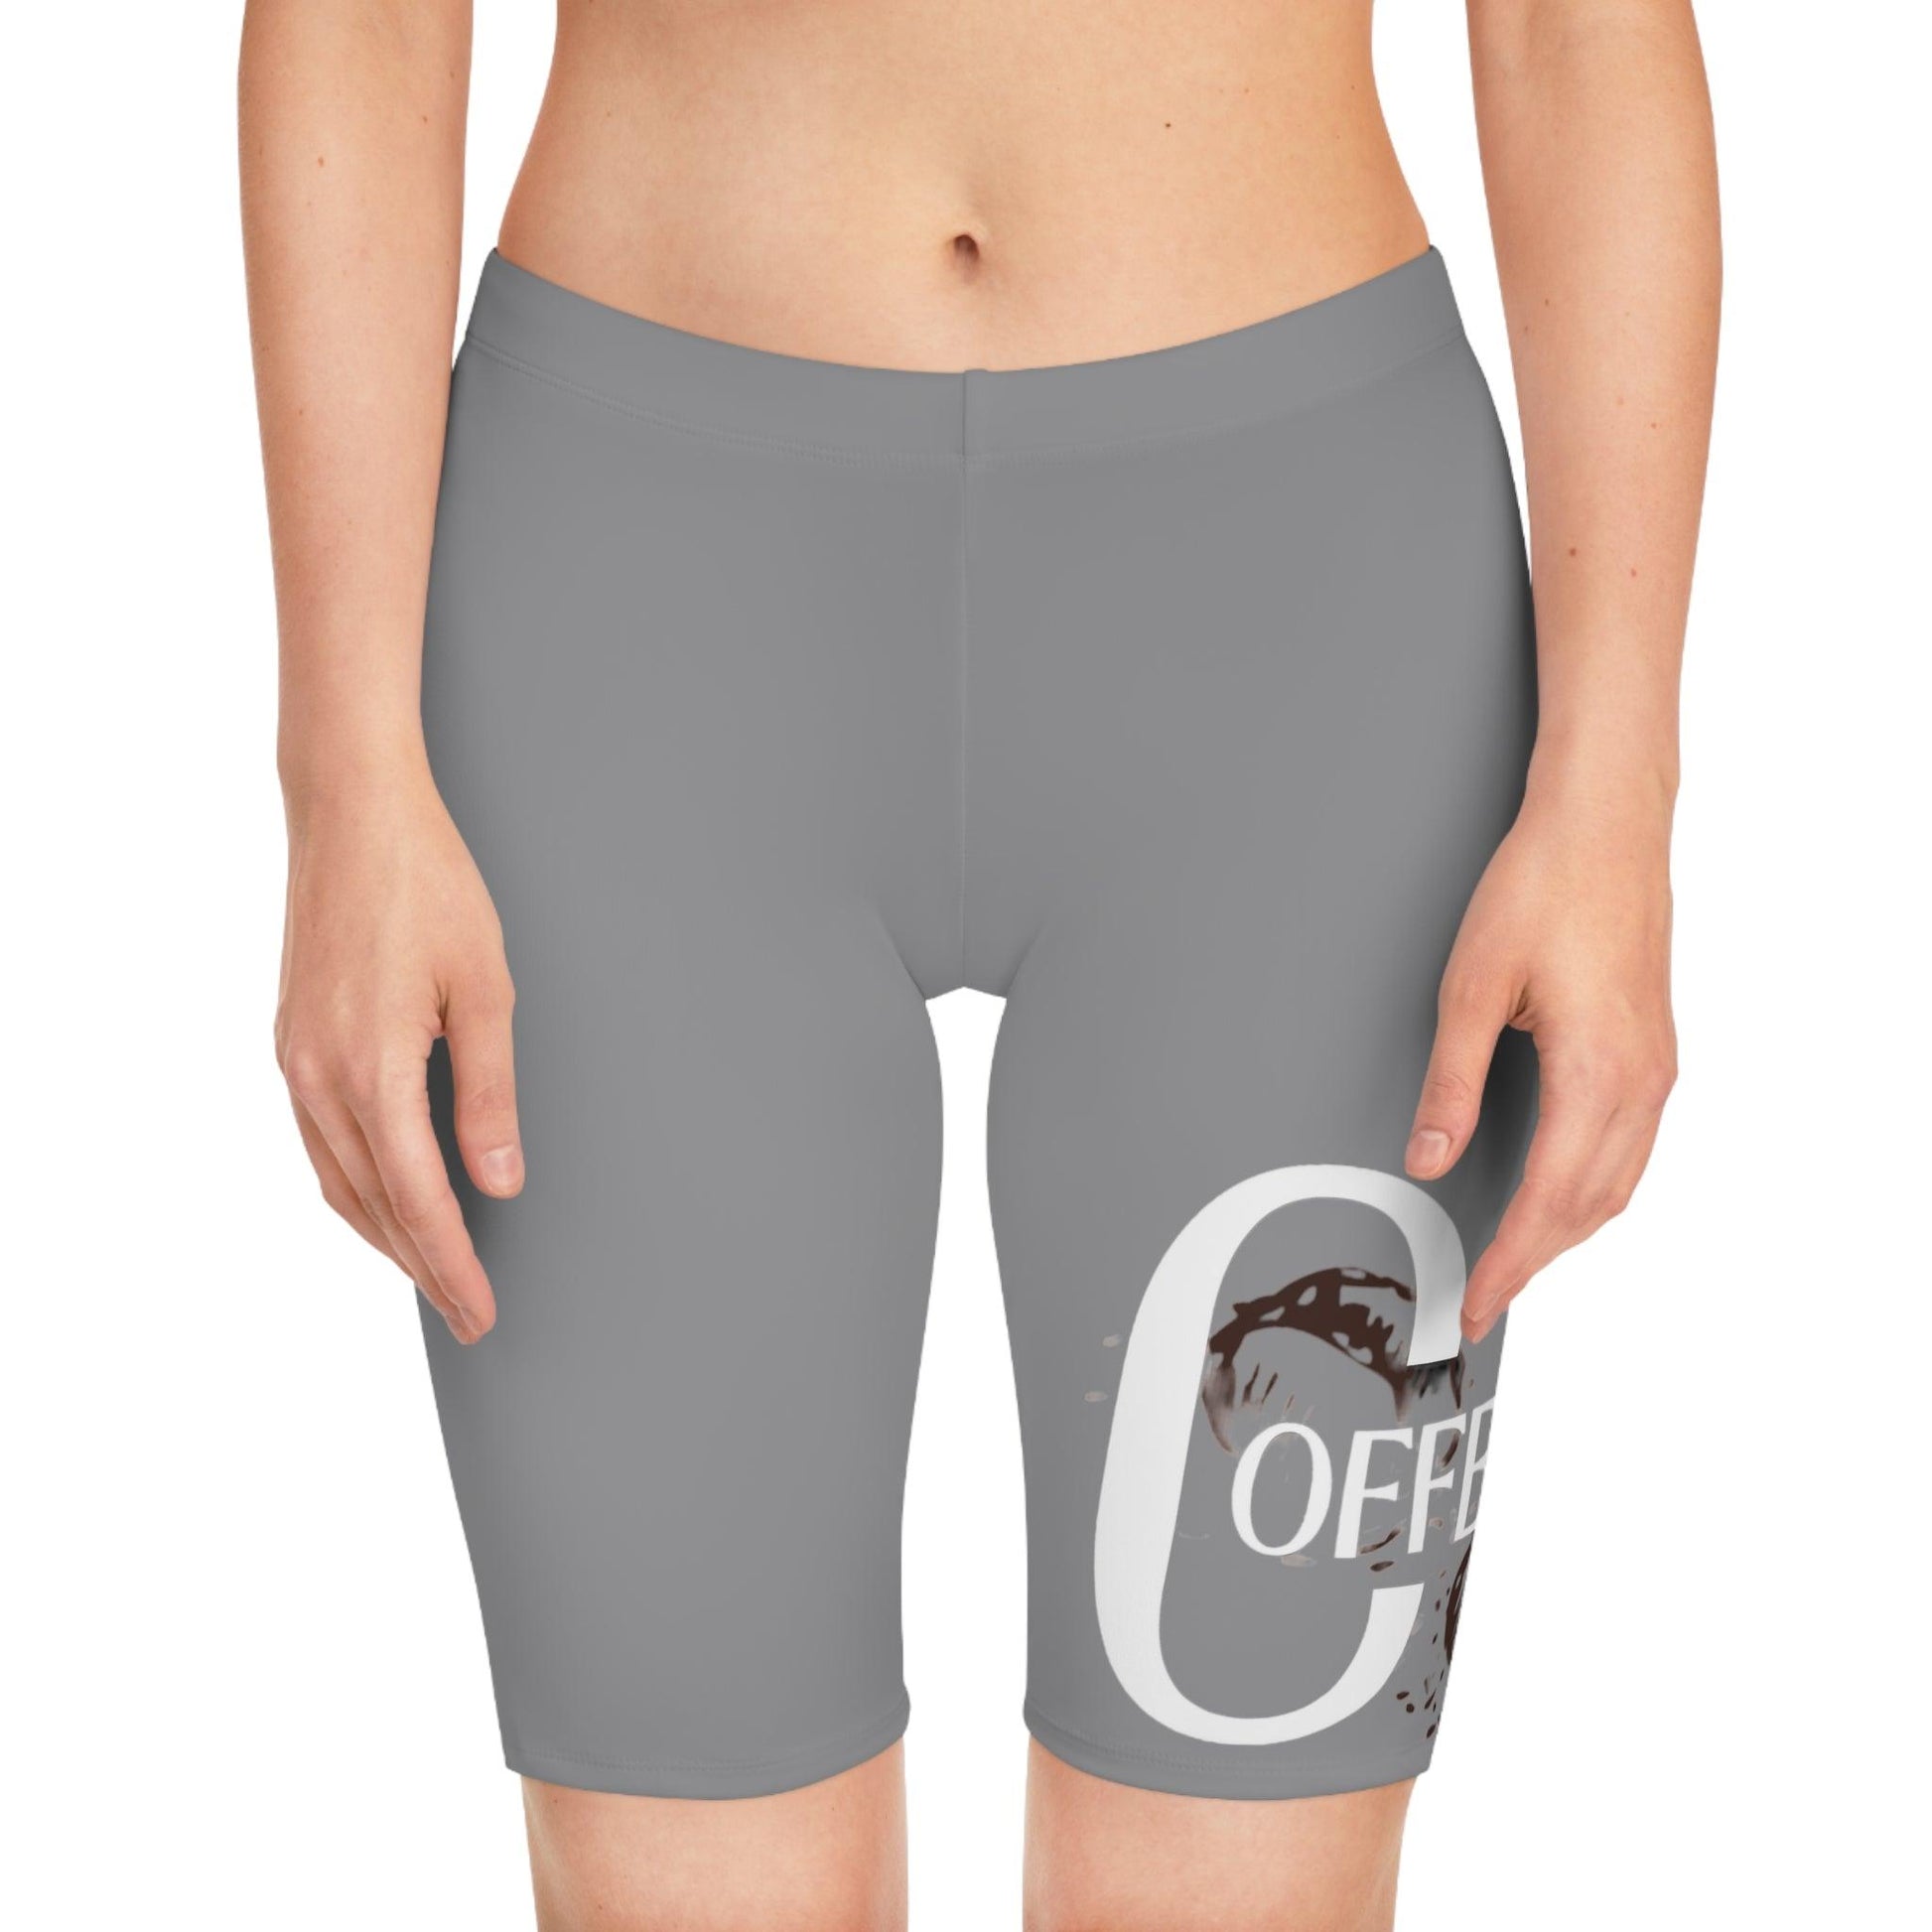 Women's Biker Sports Grey Shorts - COFFEEBRE